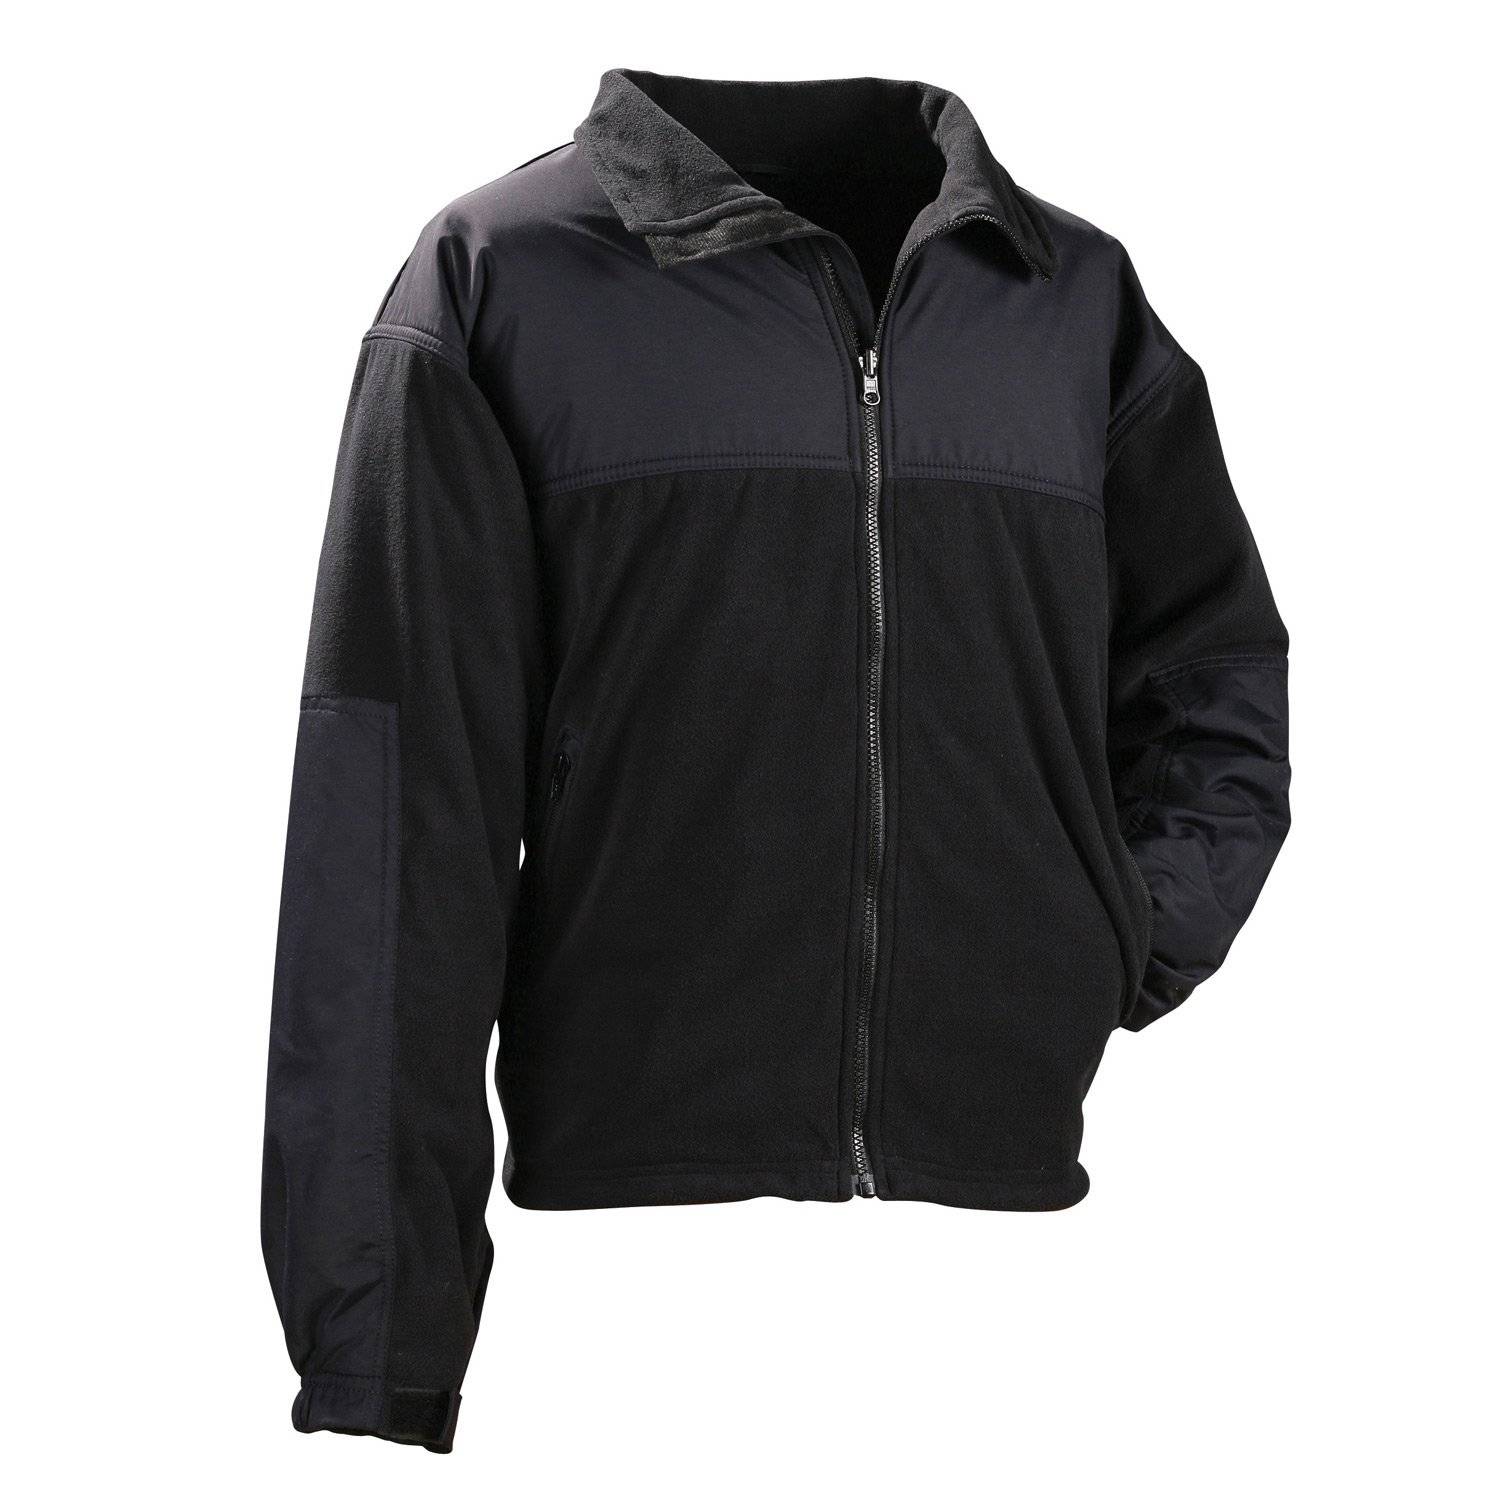 Spiewak Public Safety Performance Fleece Liner Jacket.